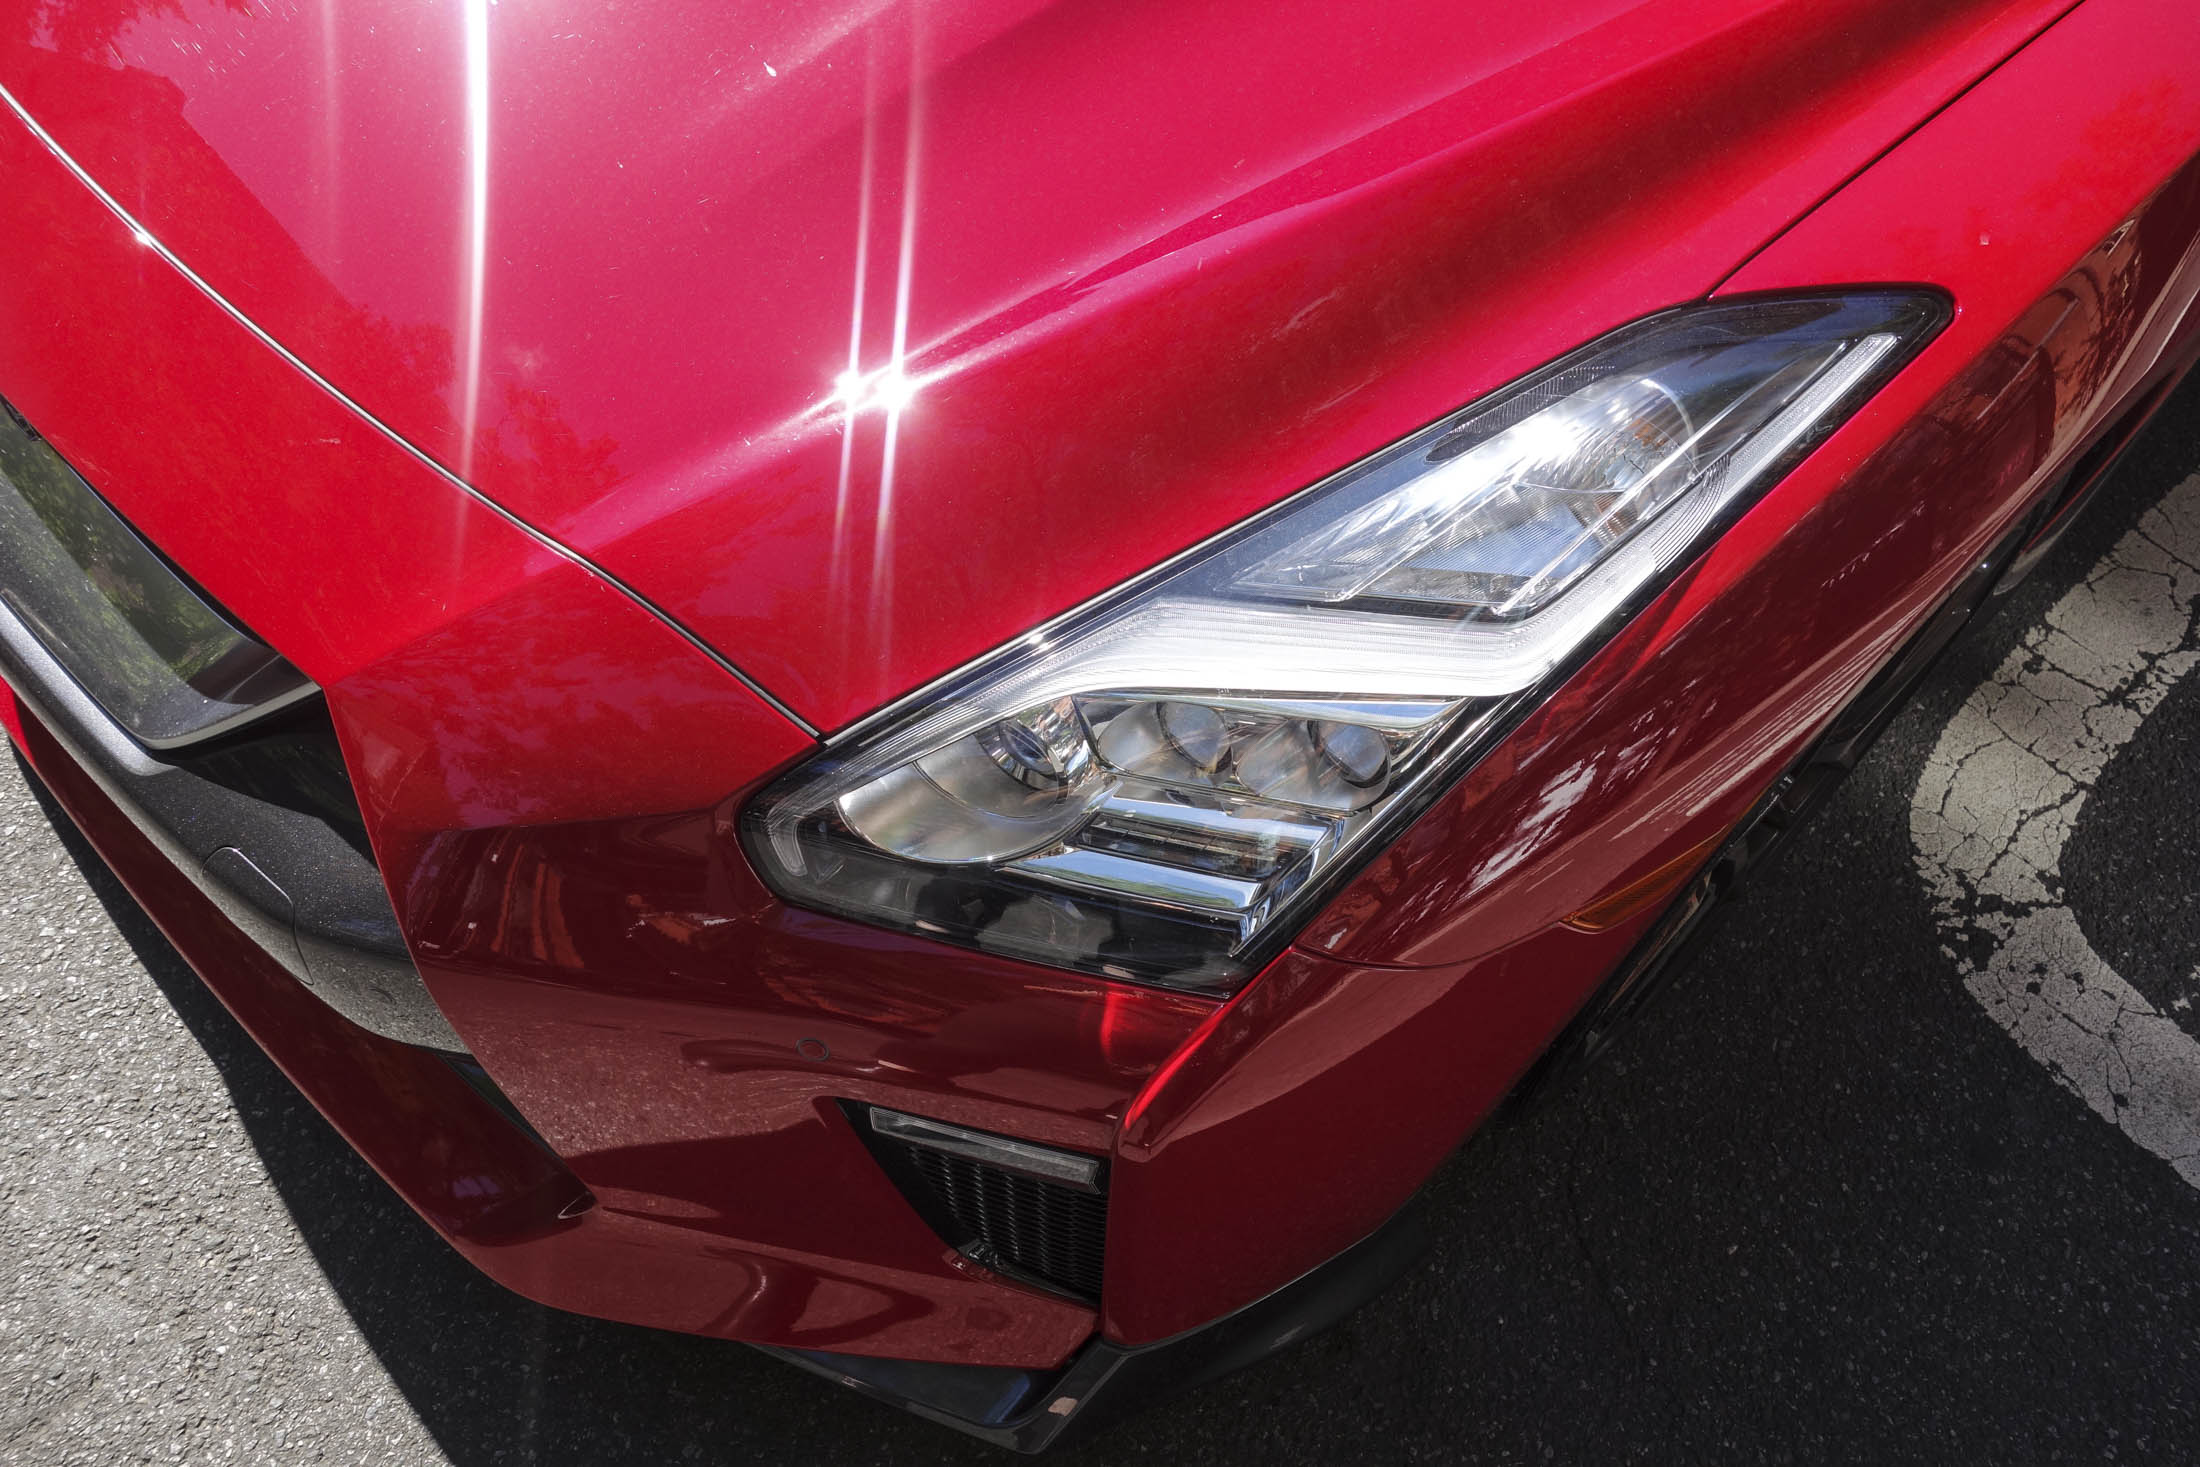 2017 Nissan GT-R Nismo somehow still a bargain at $176,585 - Autoblog